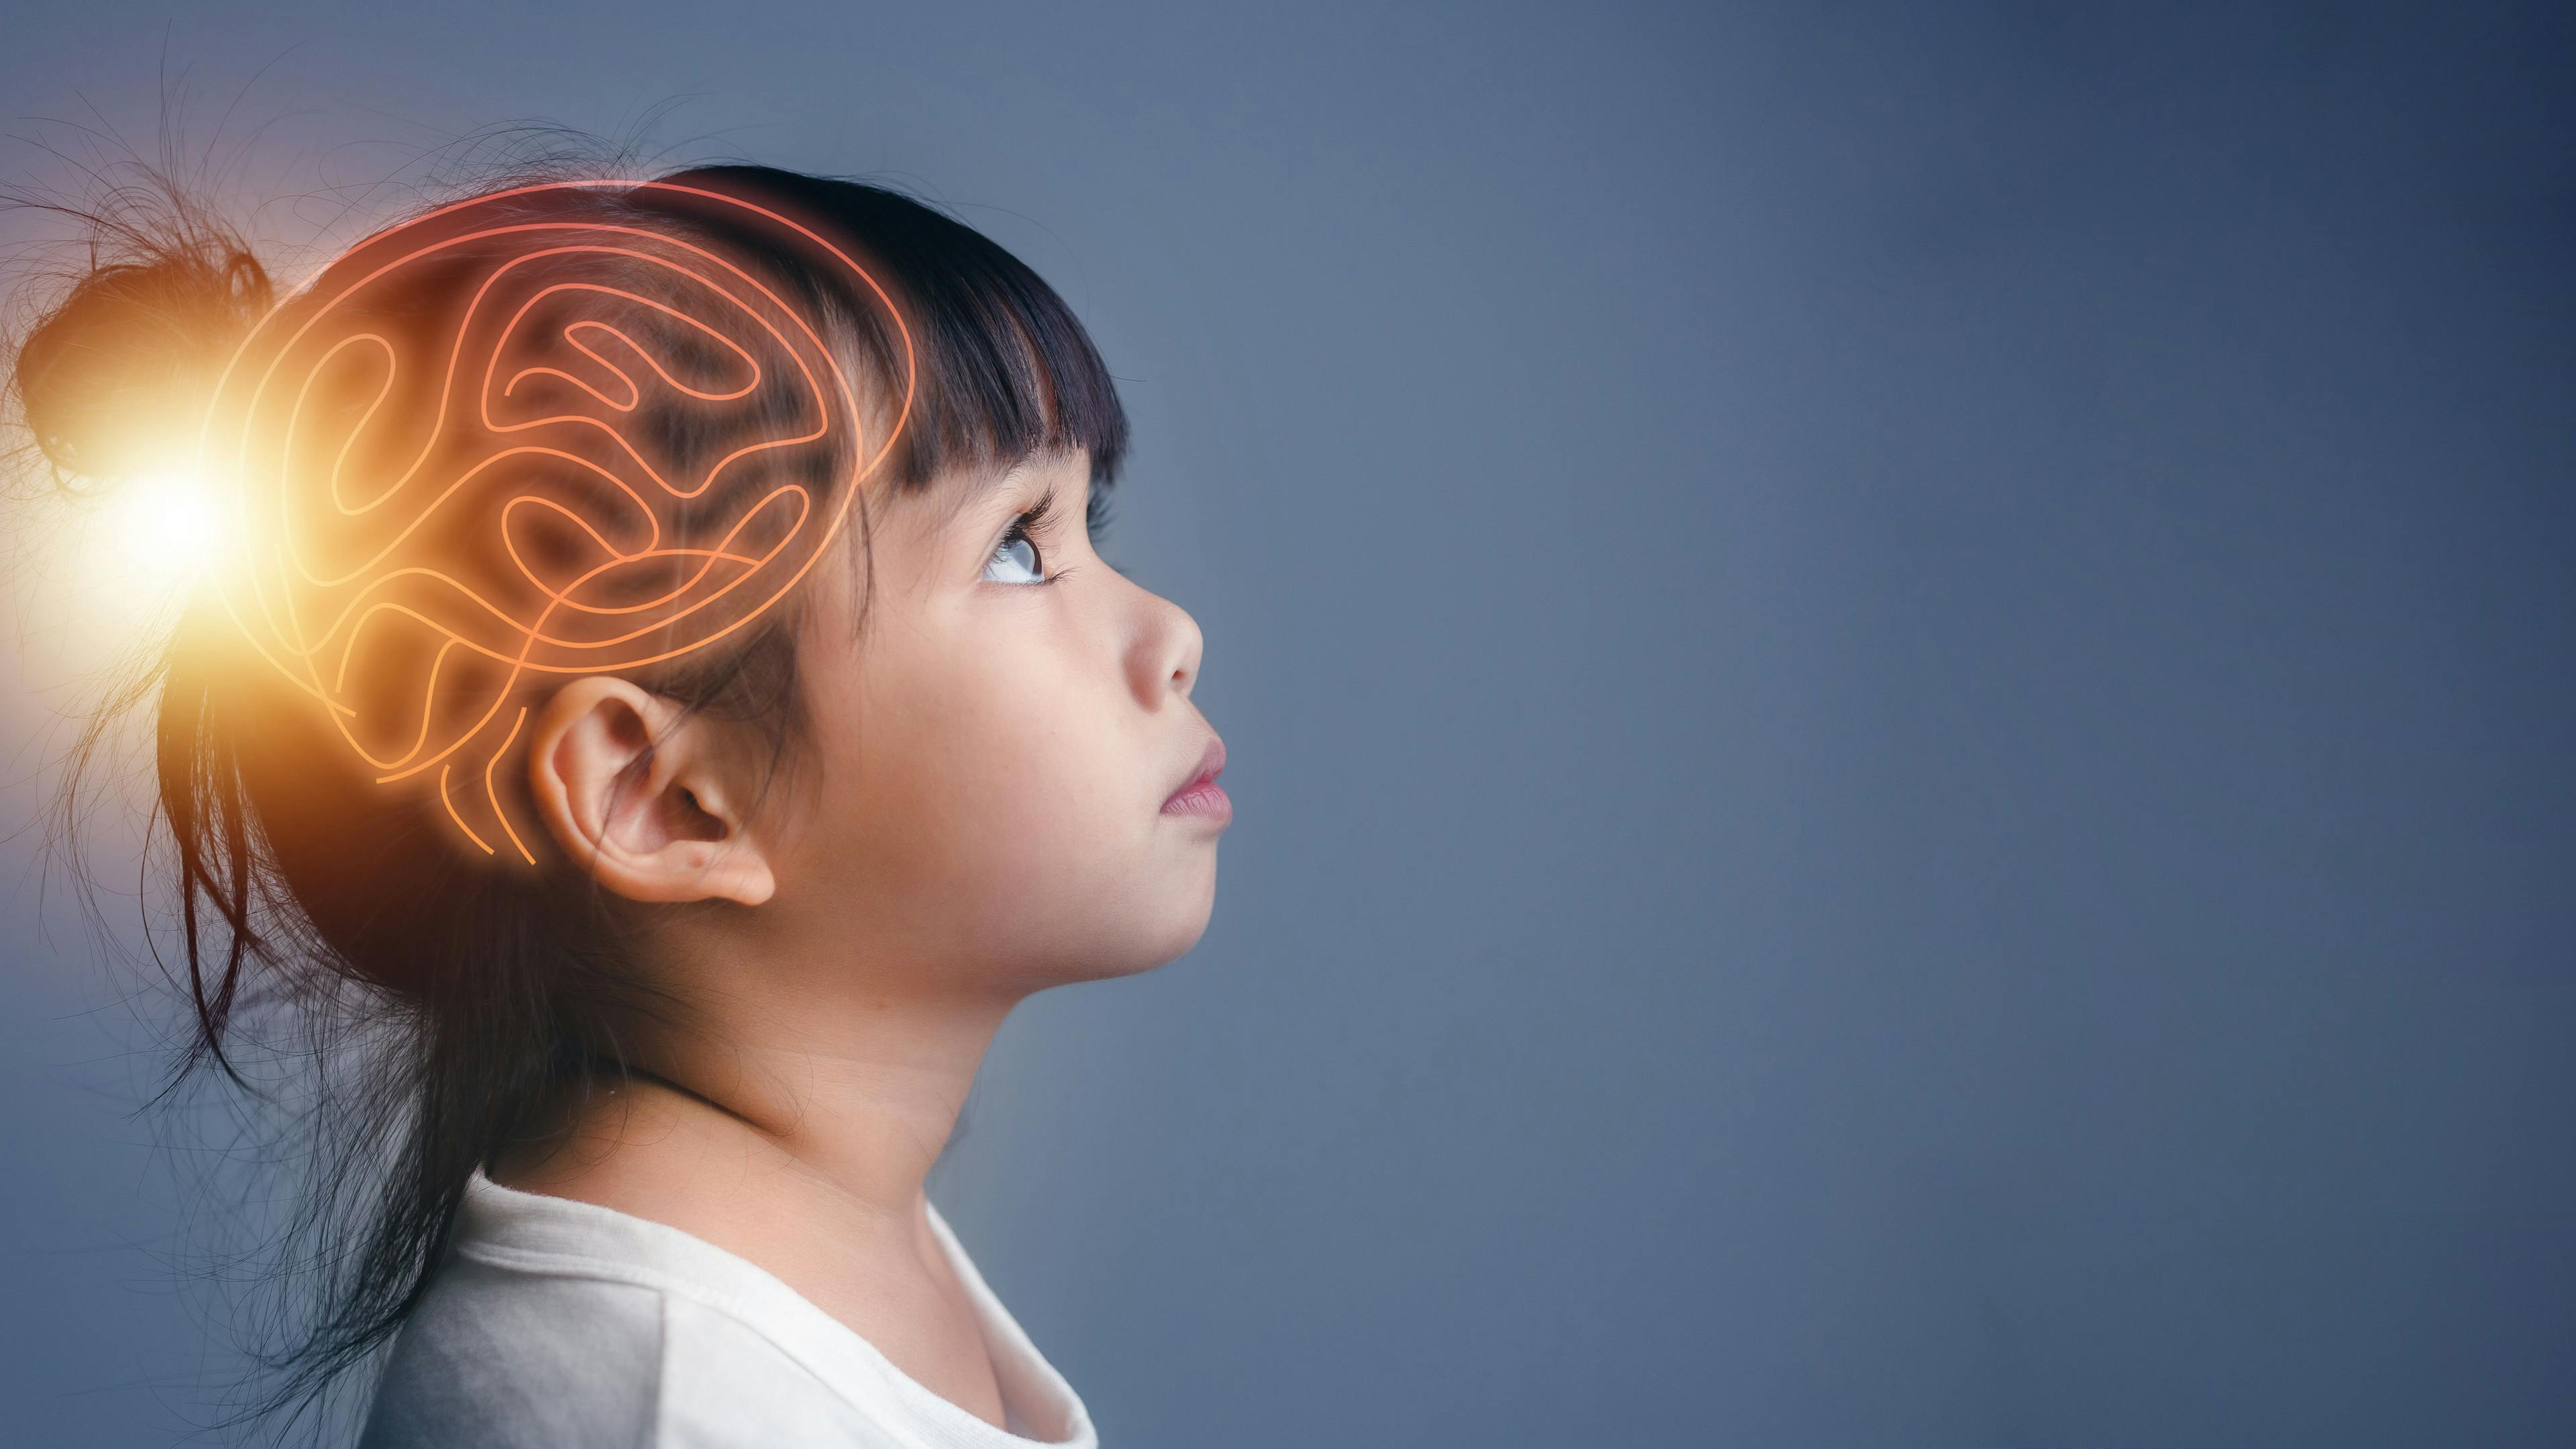 Brain Nervous System concept | Image Credit: FAMILY STOCK - stock.adobe.com